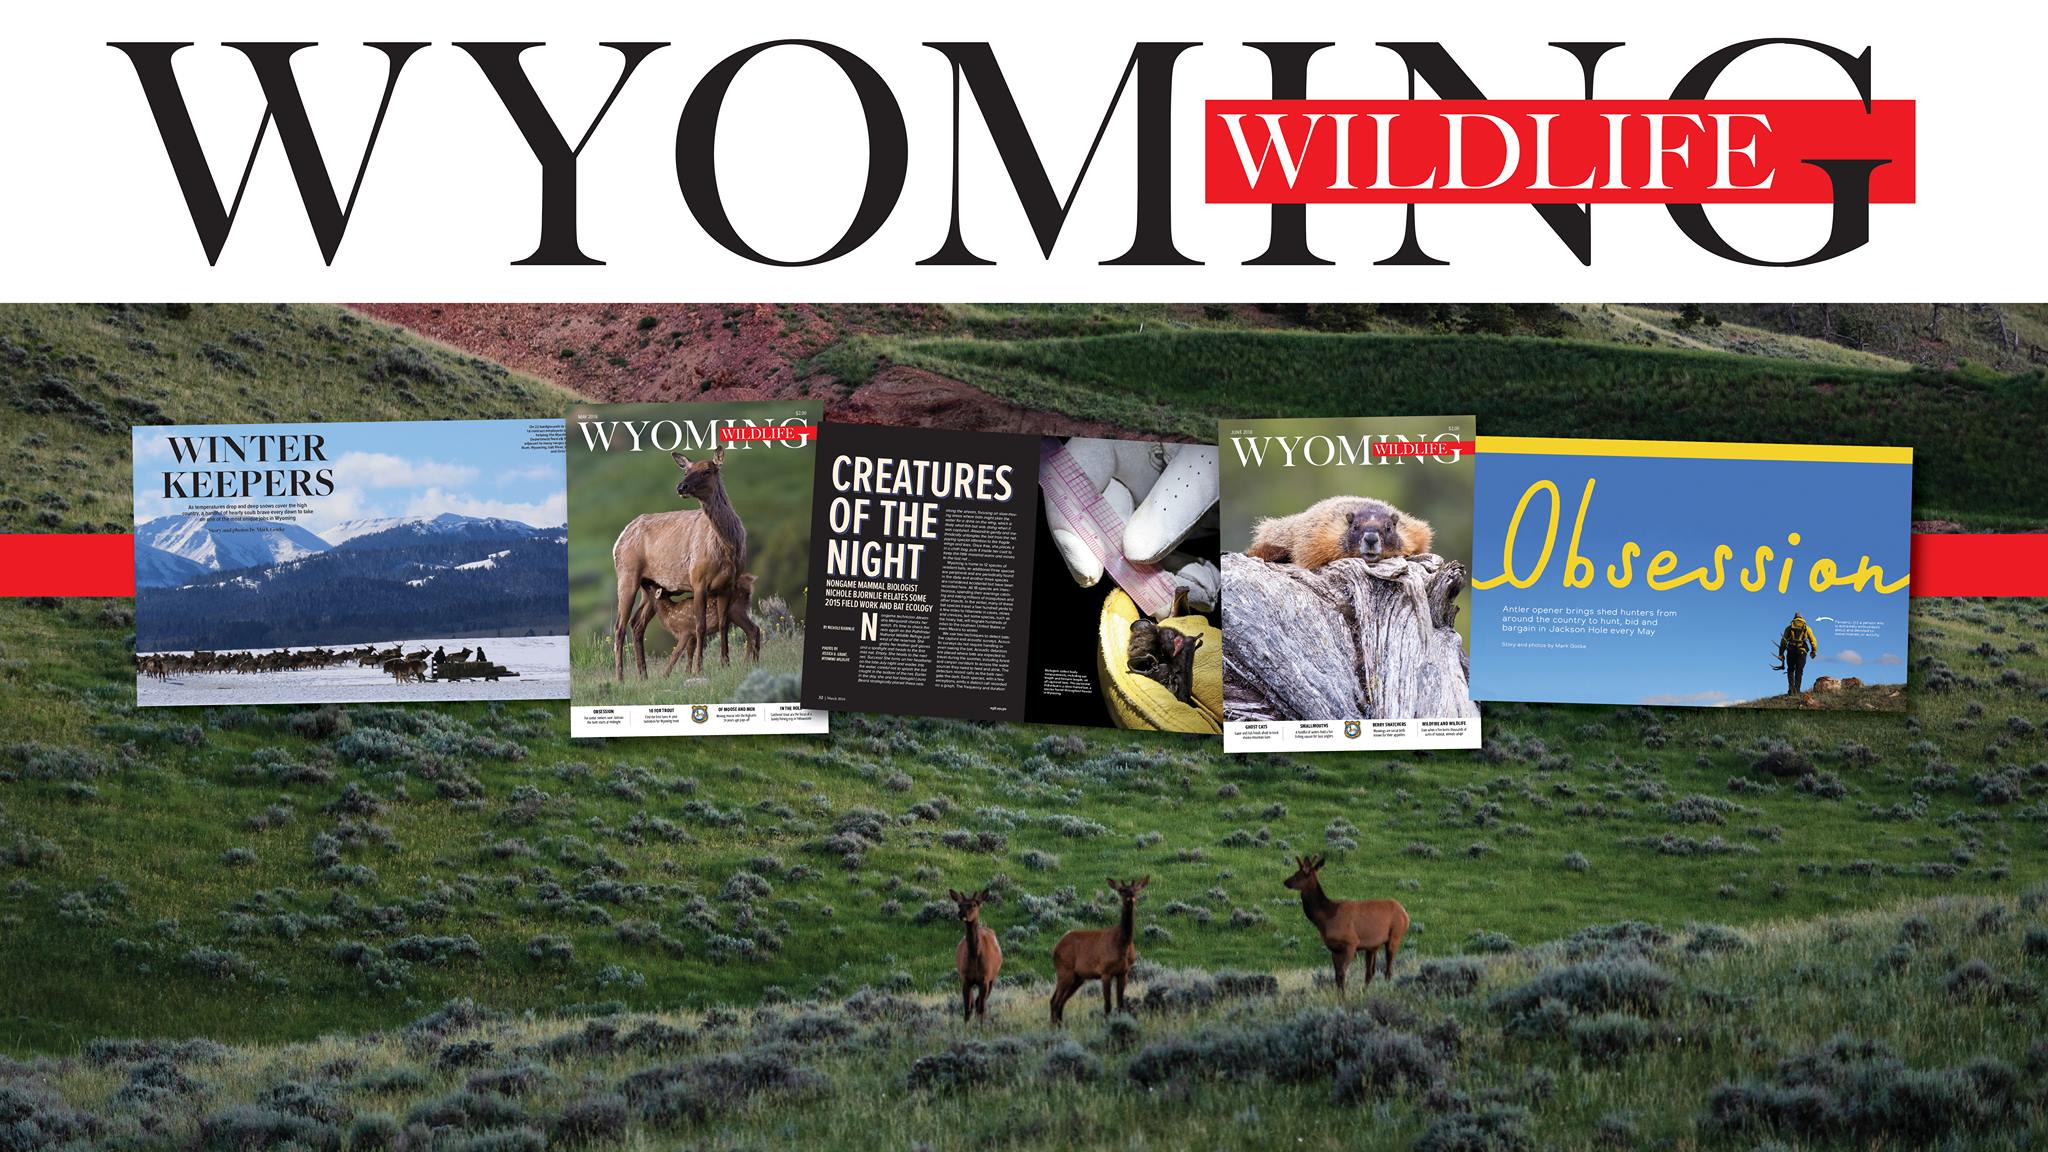 Wyoming wildlife management jobs